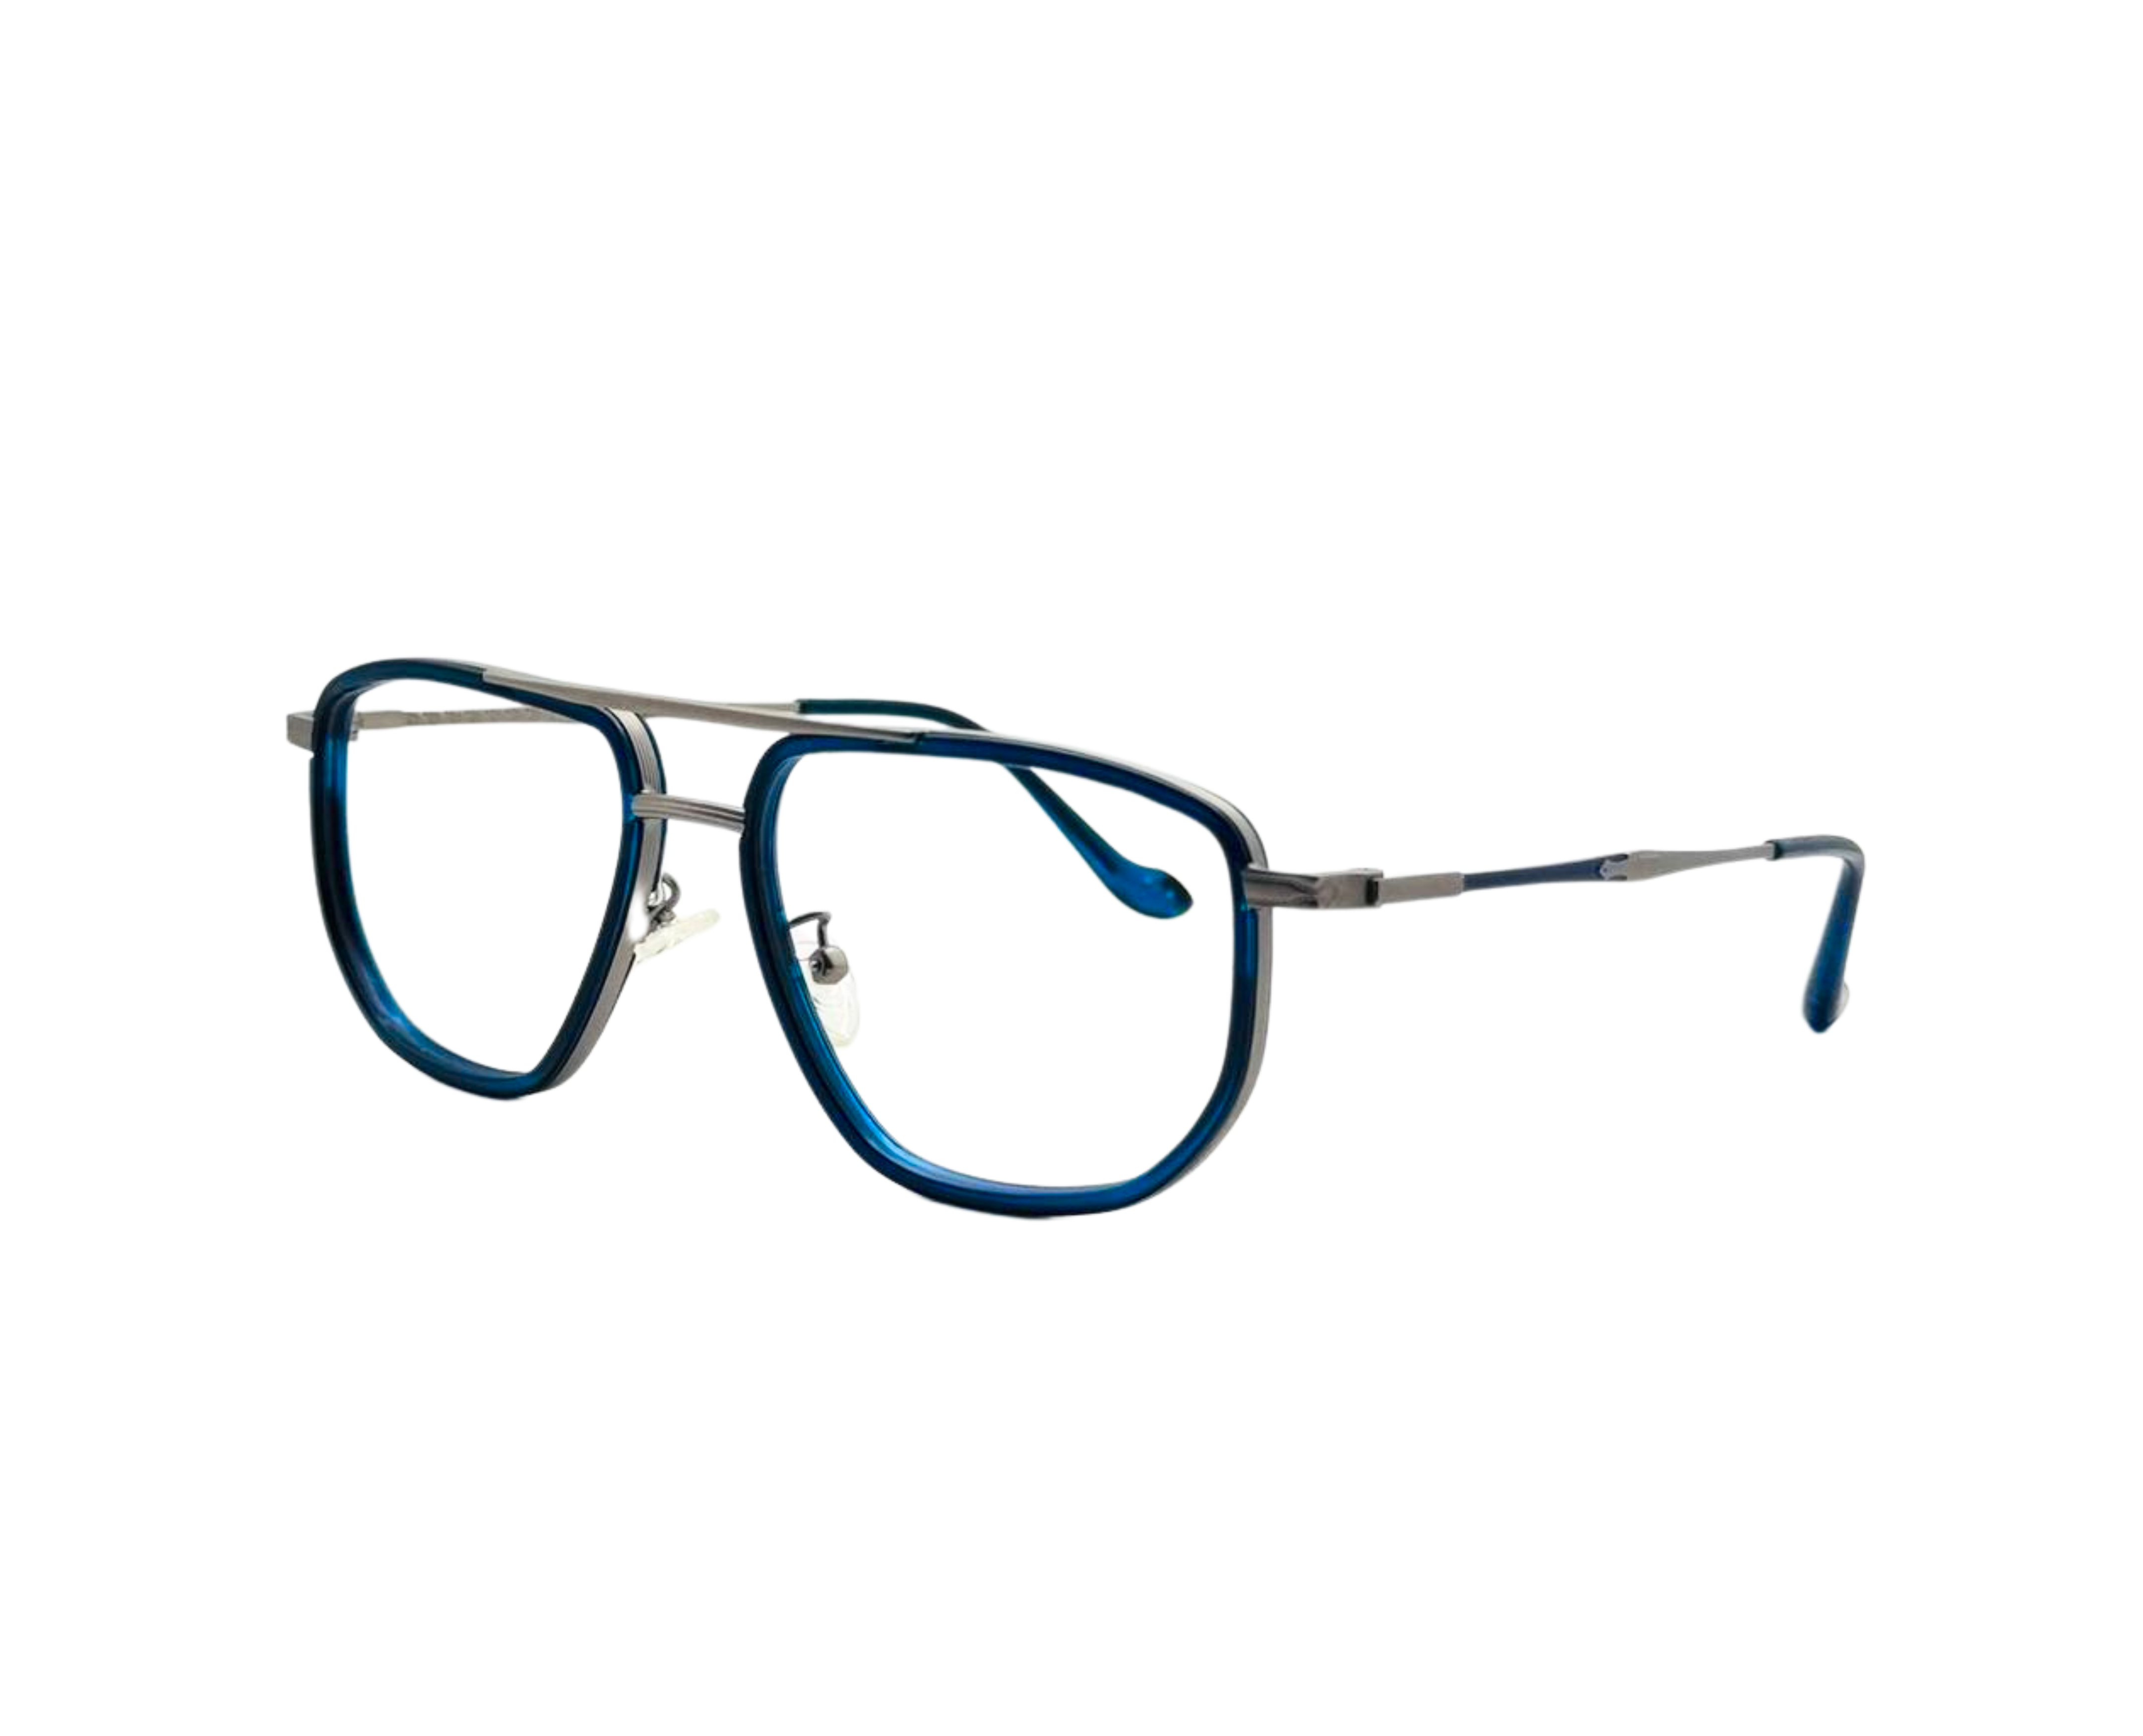 NS Deluxe - 805 - Blue - Eyeglasses